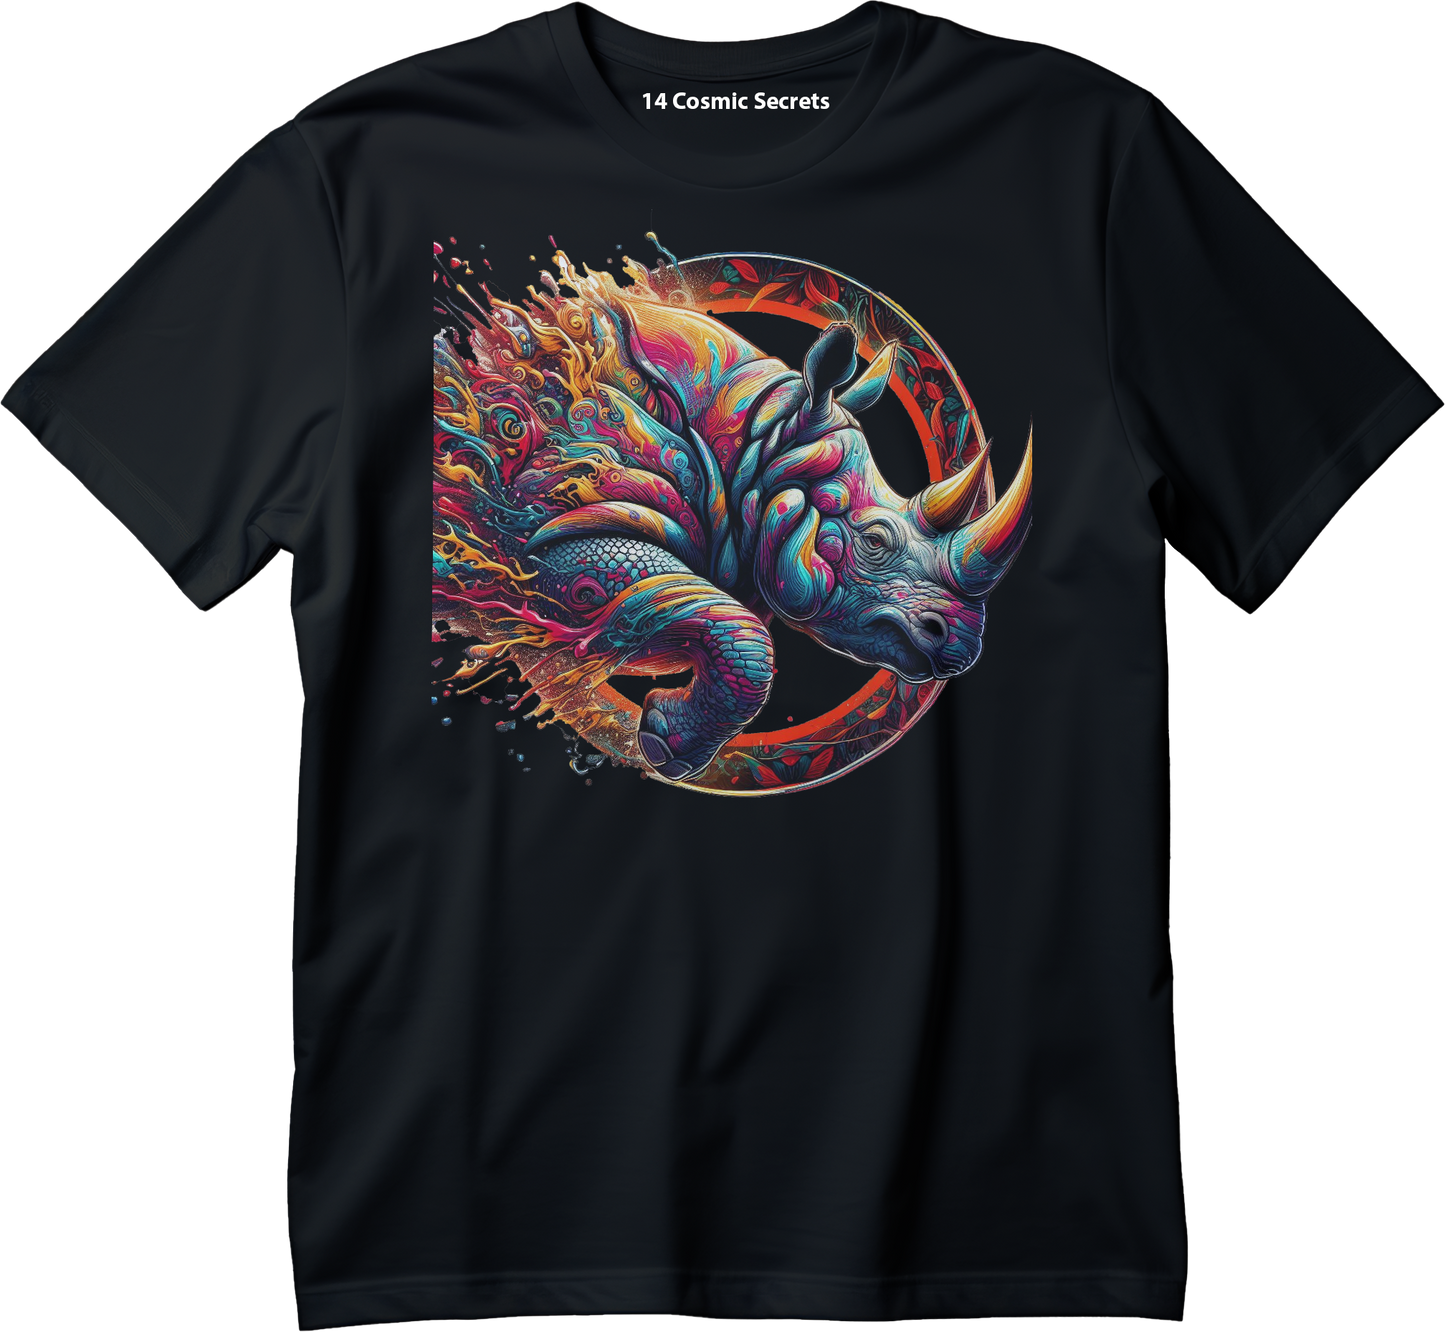 Rhino's Splash Graphic Printed T-Shirt  Cotton T-Shirt Magnificence of India T-Shirt